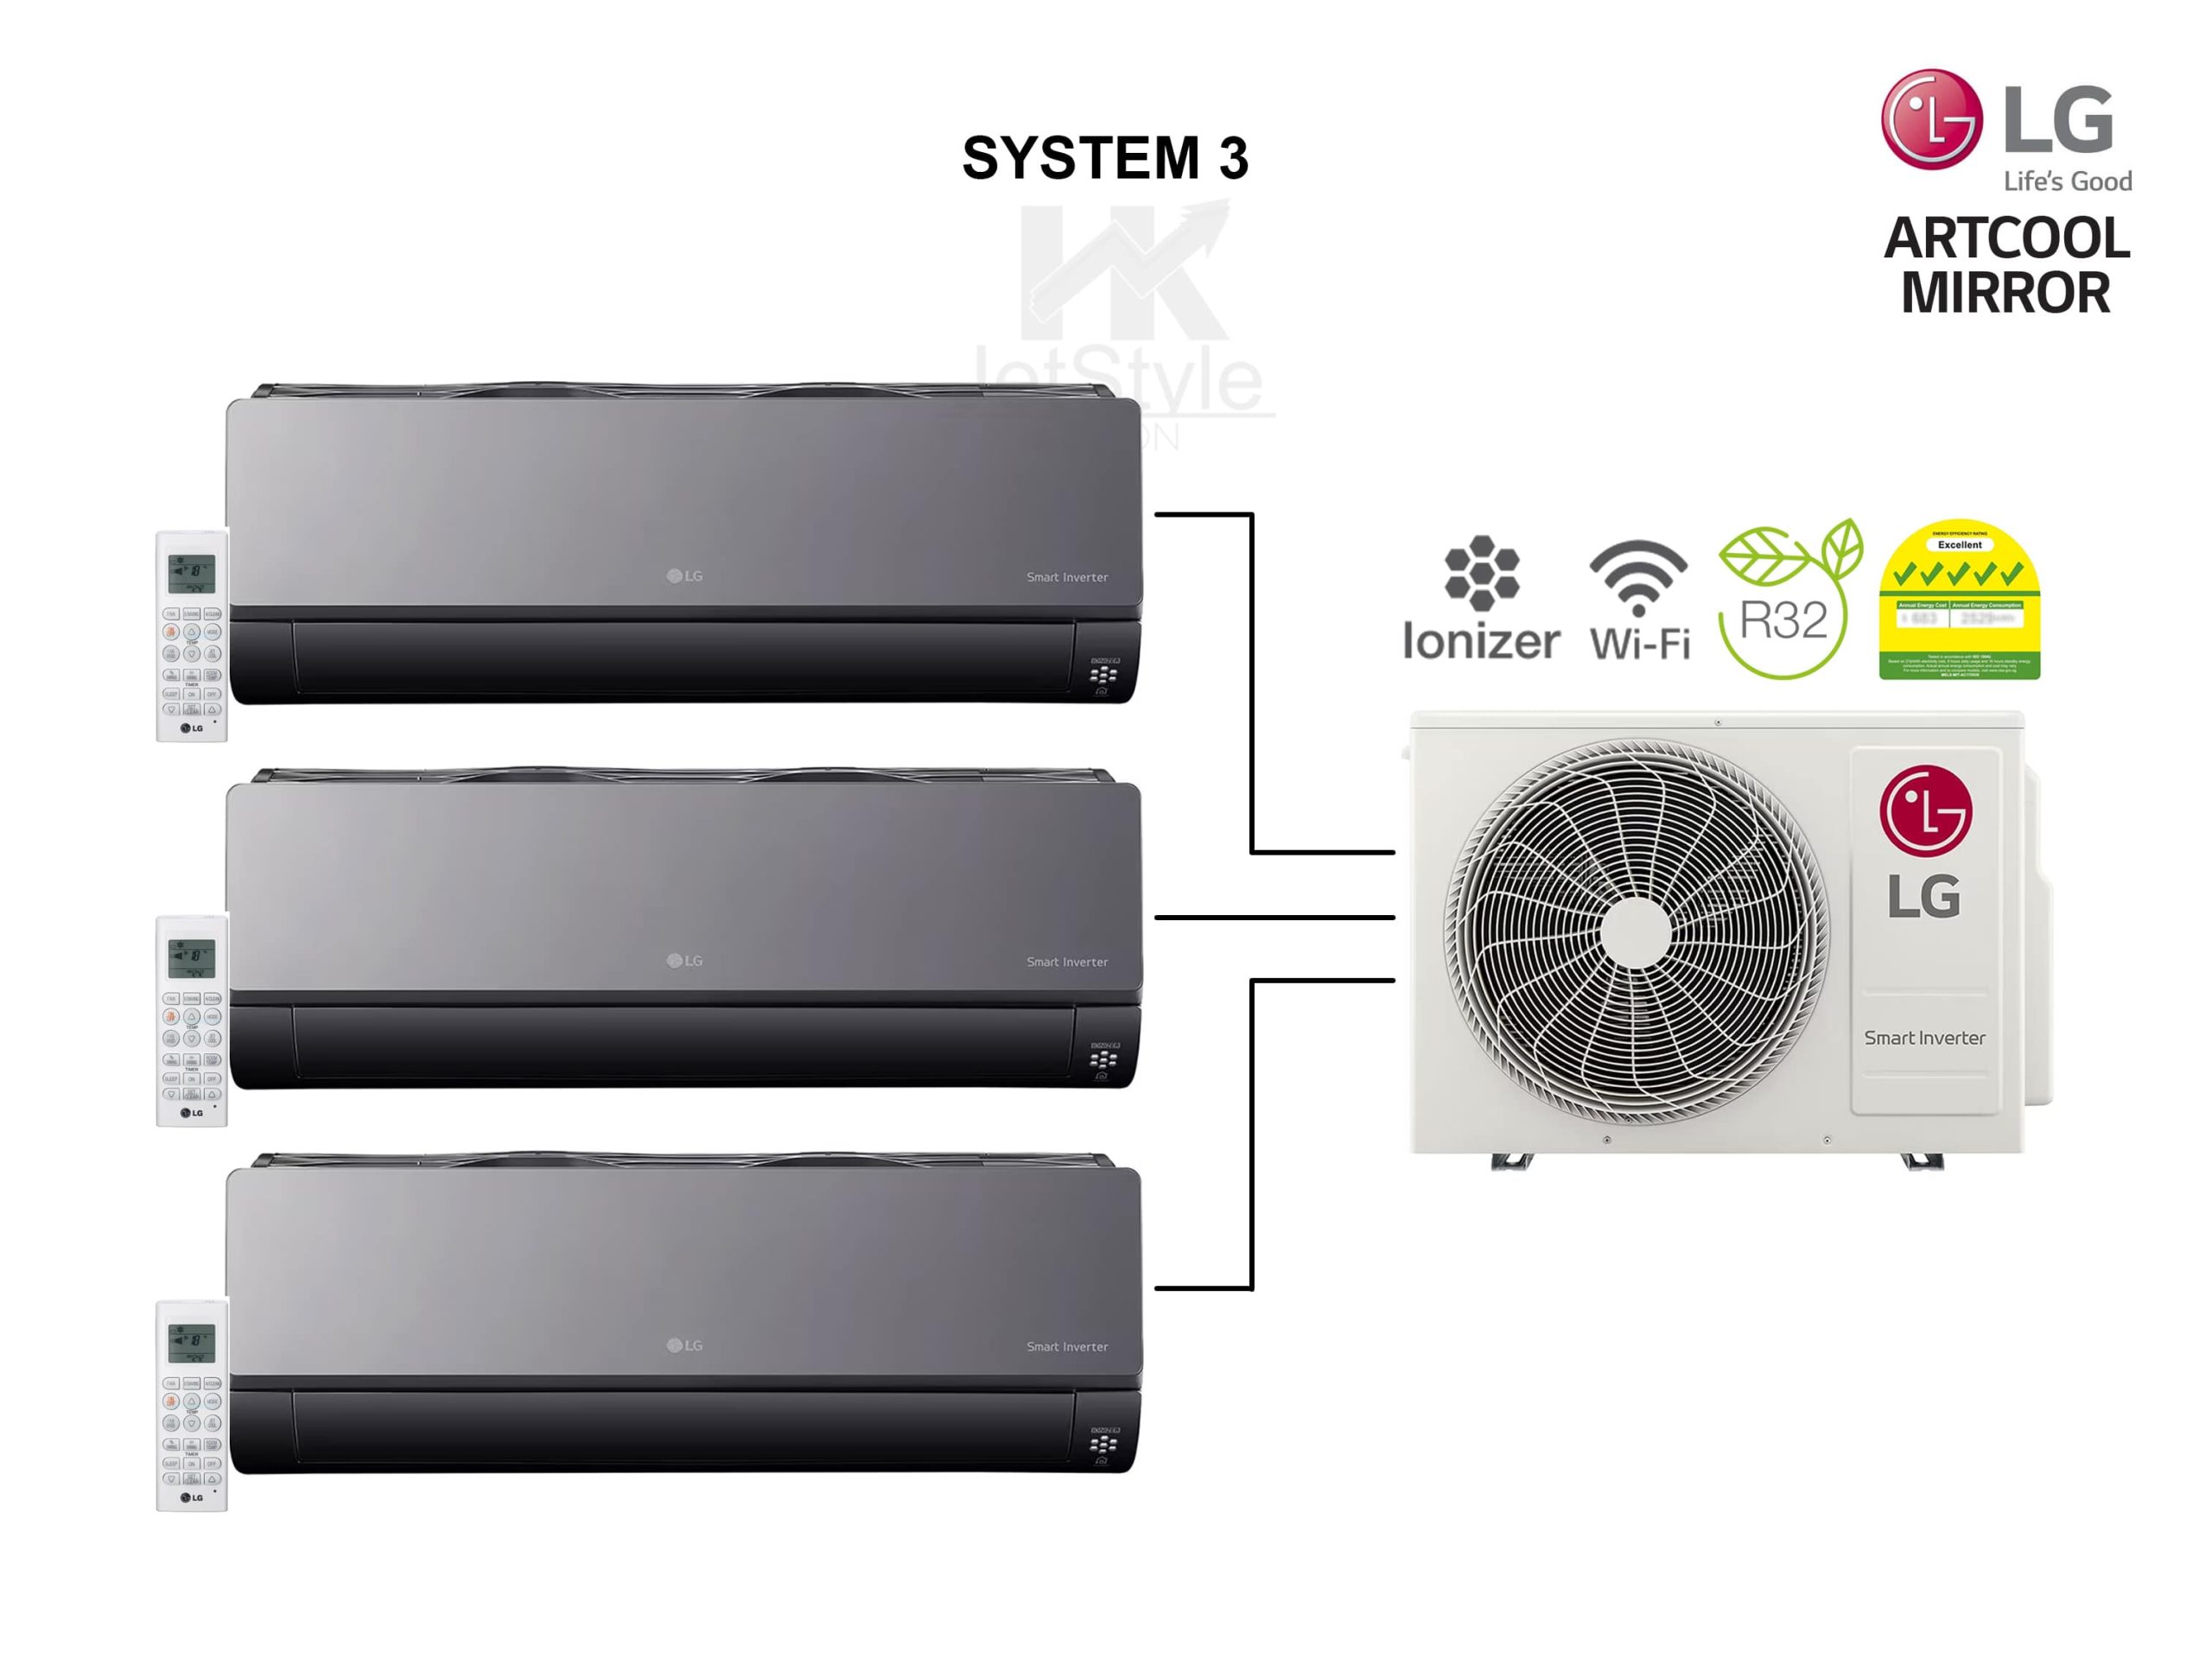 LG Artcool System 3